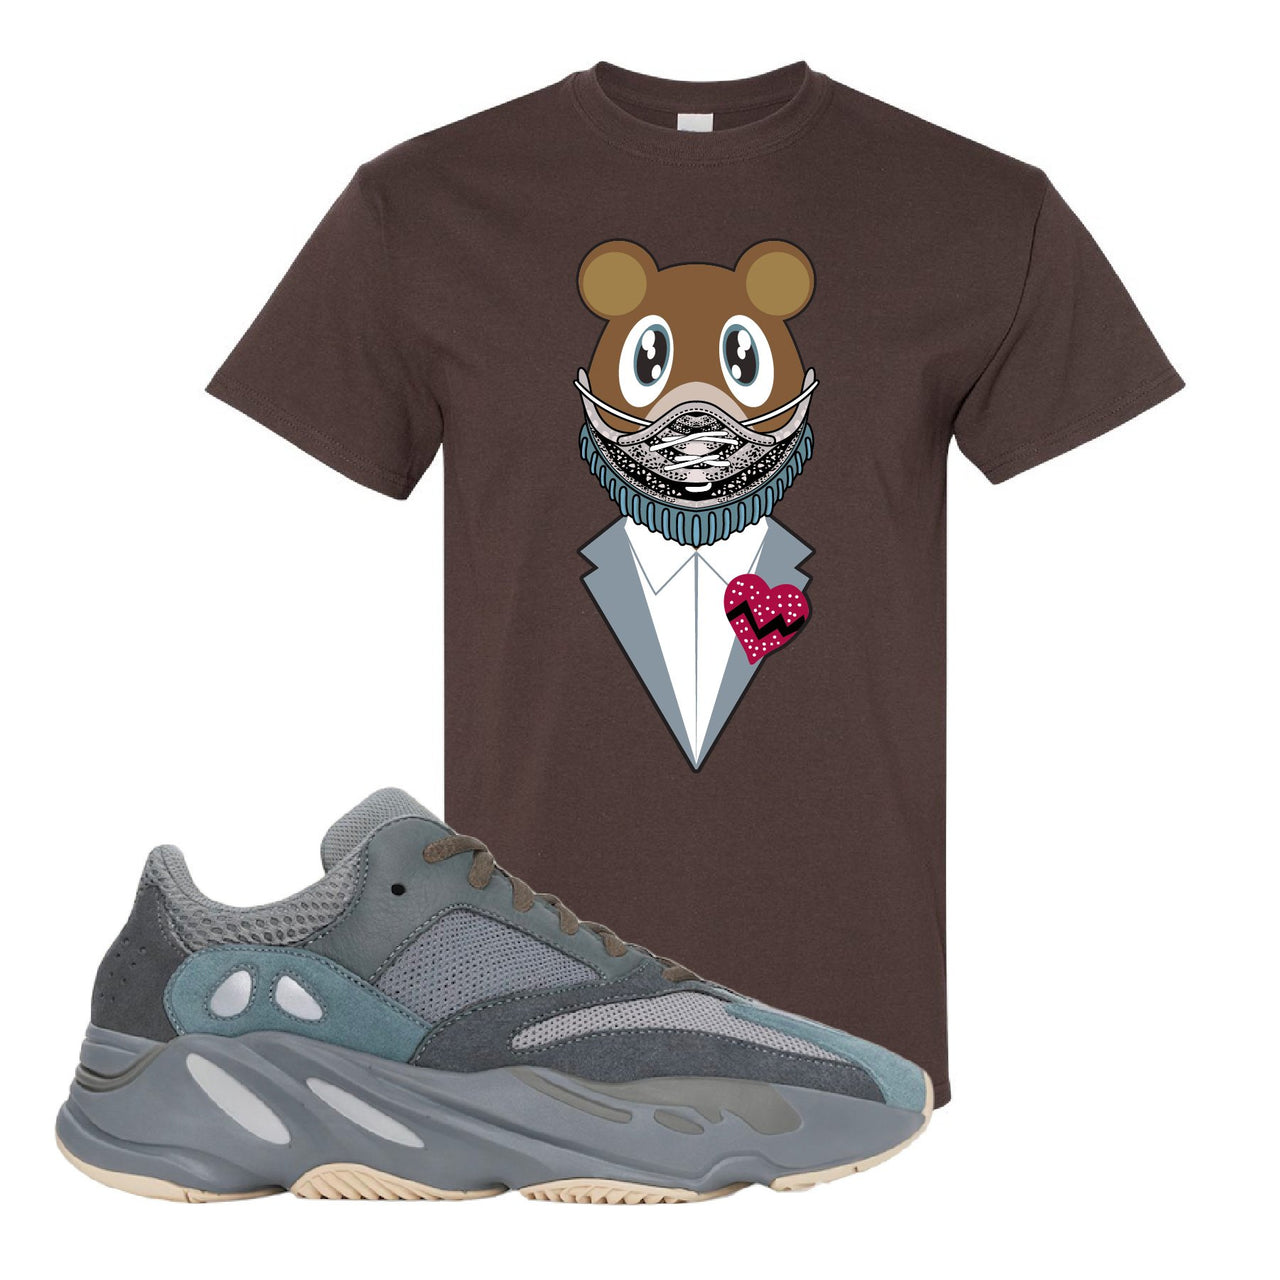 Yeezy Boost 700 Teal Blue Yeezy Sneaker Mask Dark Chocolate Sneaker Hook Up T-Shirt